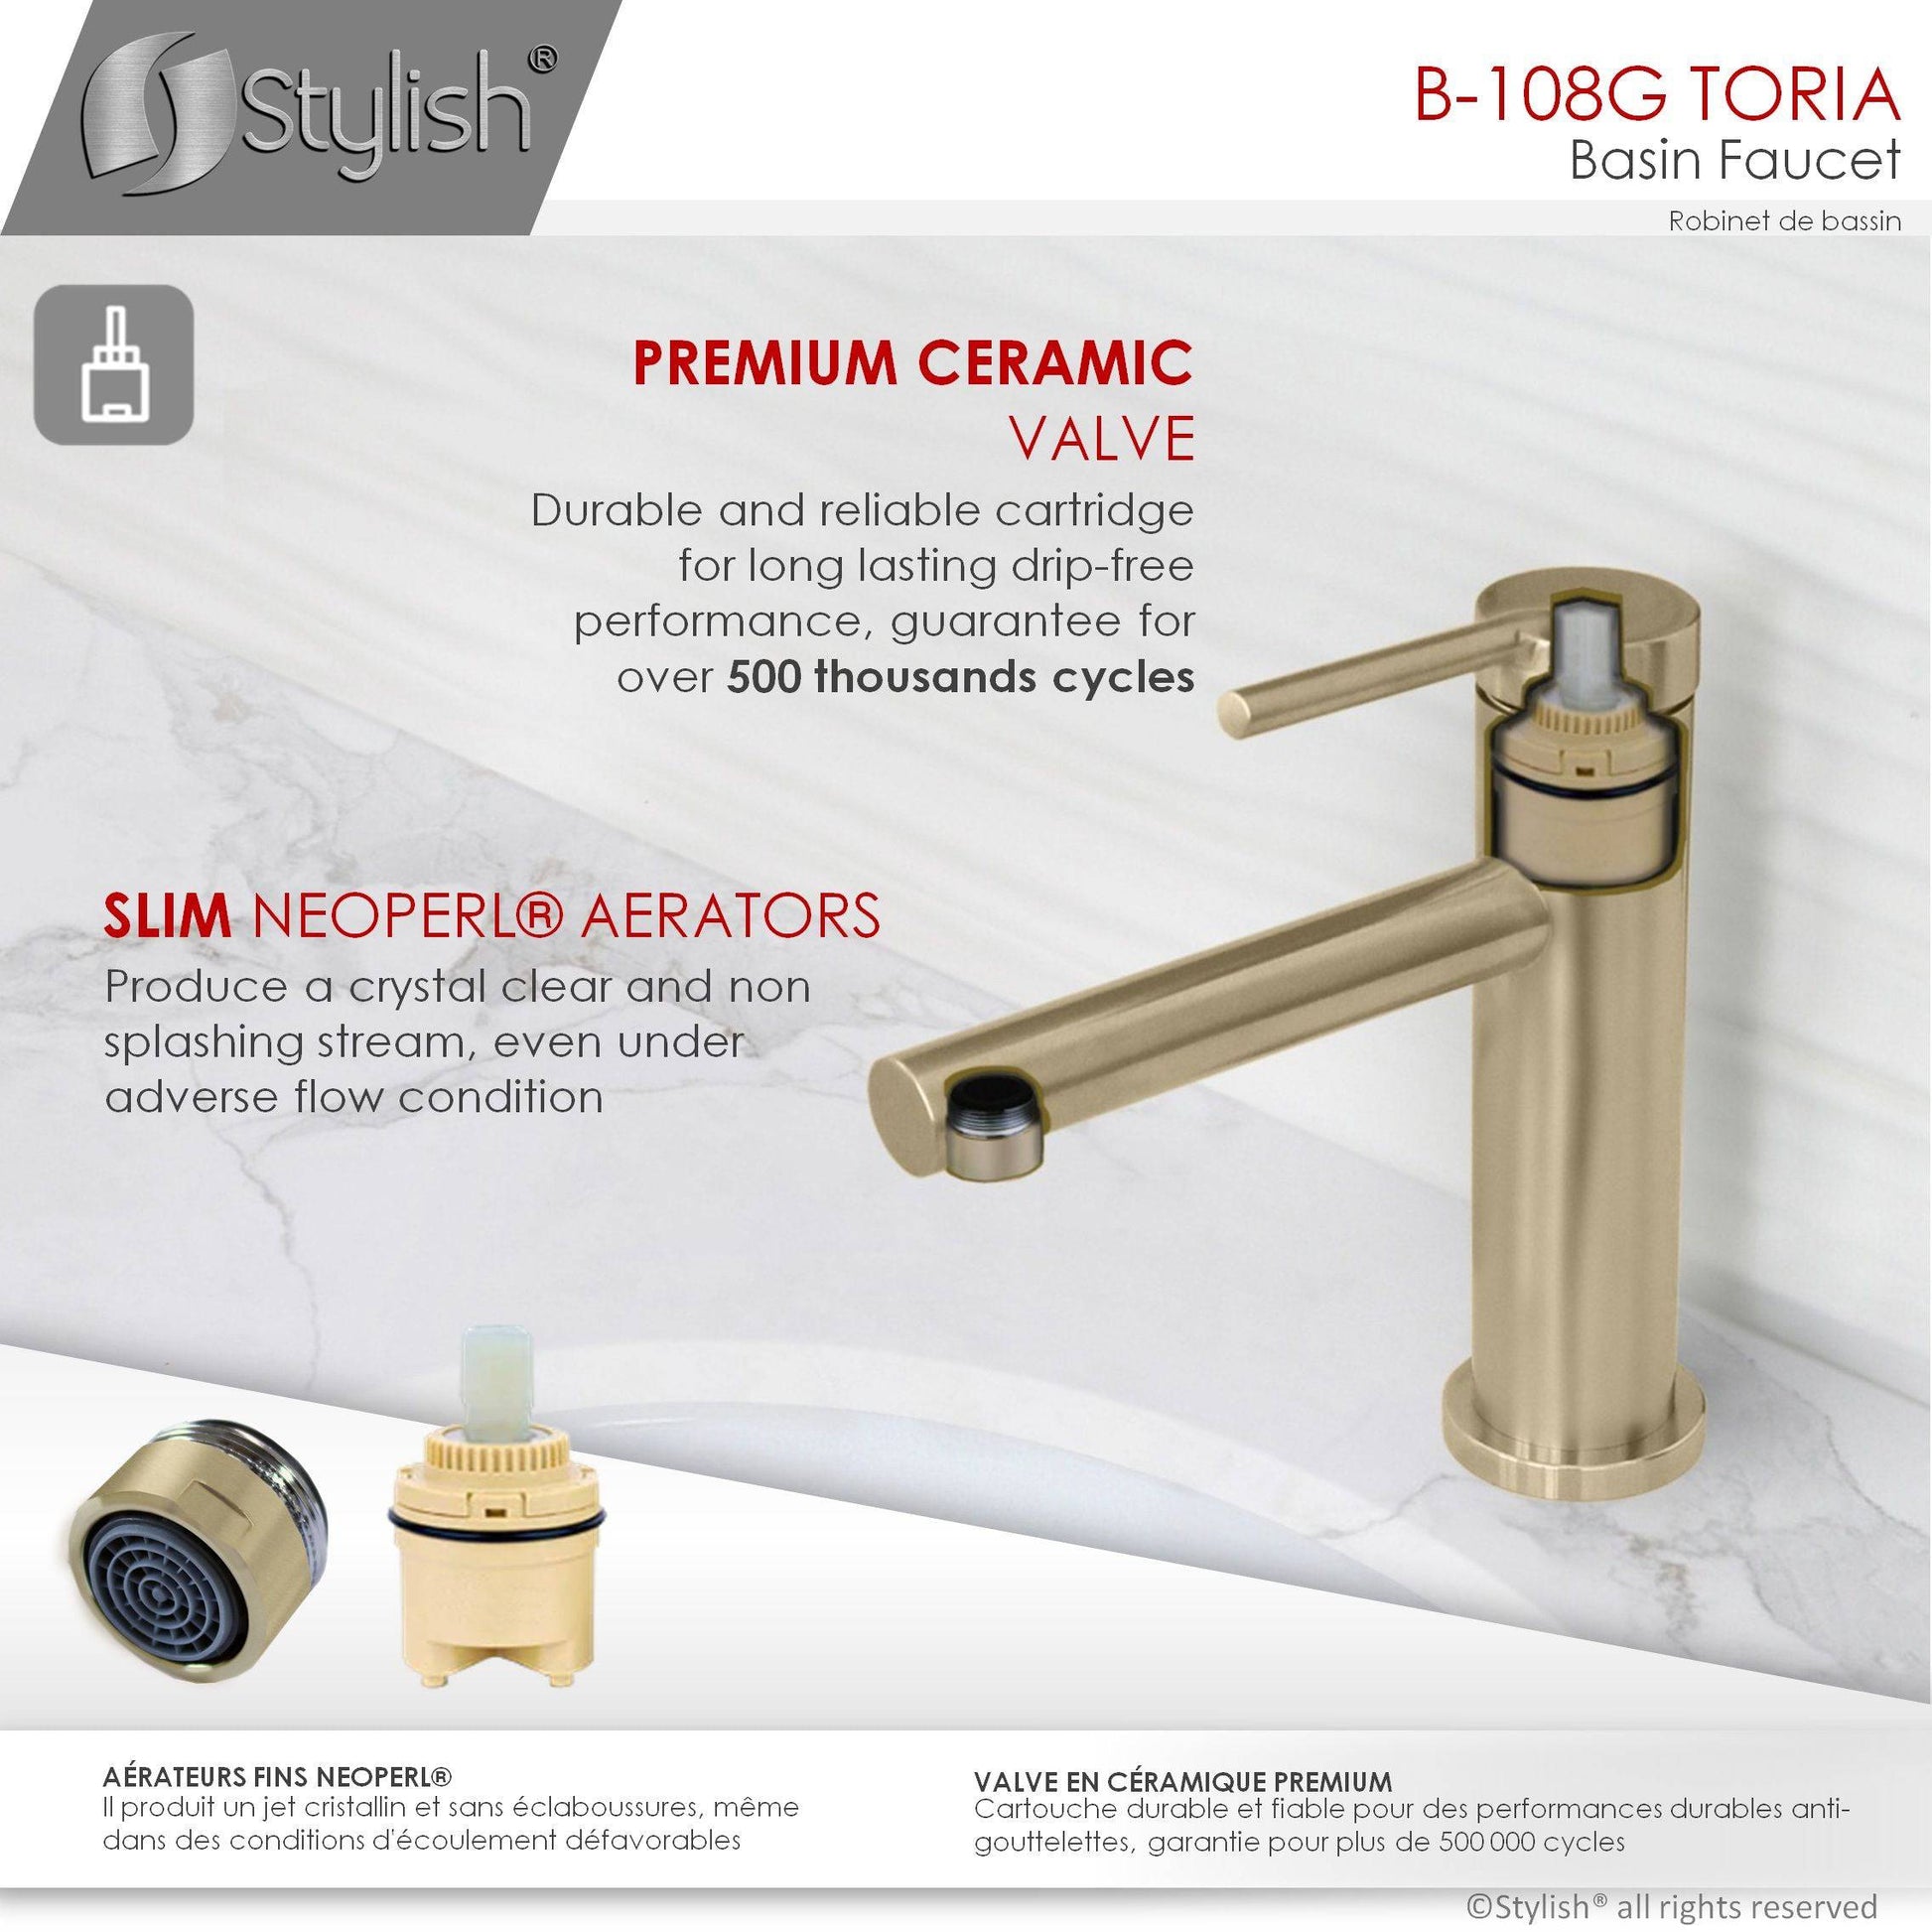 Stylish Toria 6" Single Handle Basin Bathroom Faucet in Brushed Gold Finish B-108G - Renoz